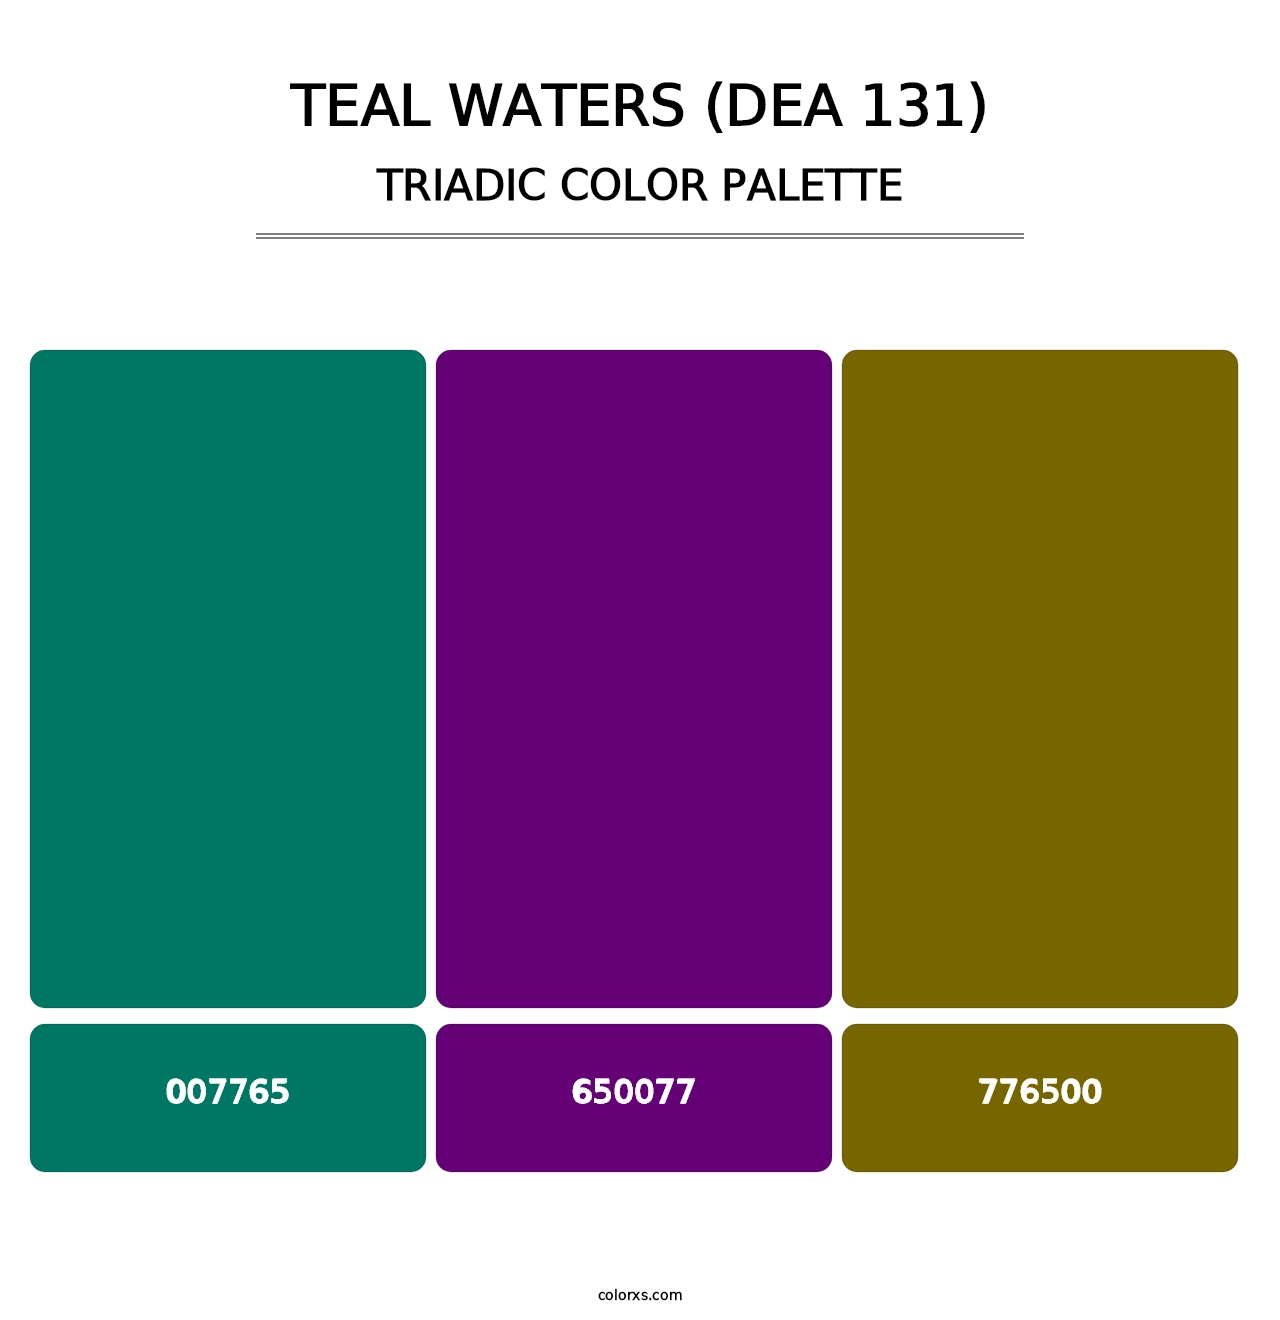 Teal Waters (DEA 131) - Triadic Color Palette